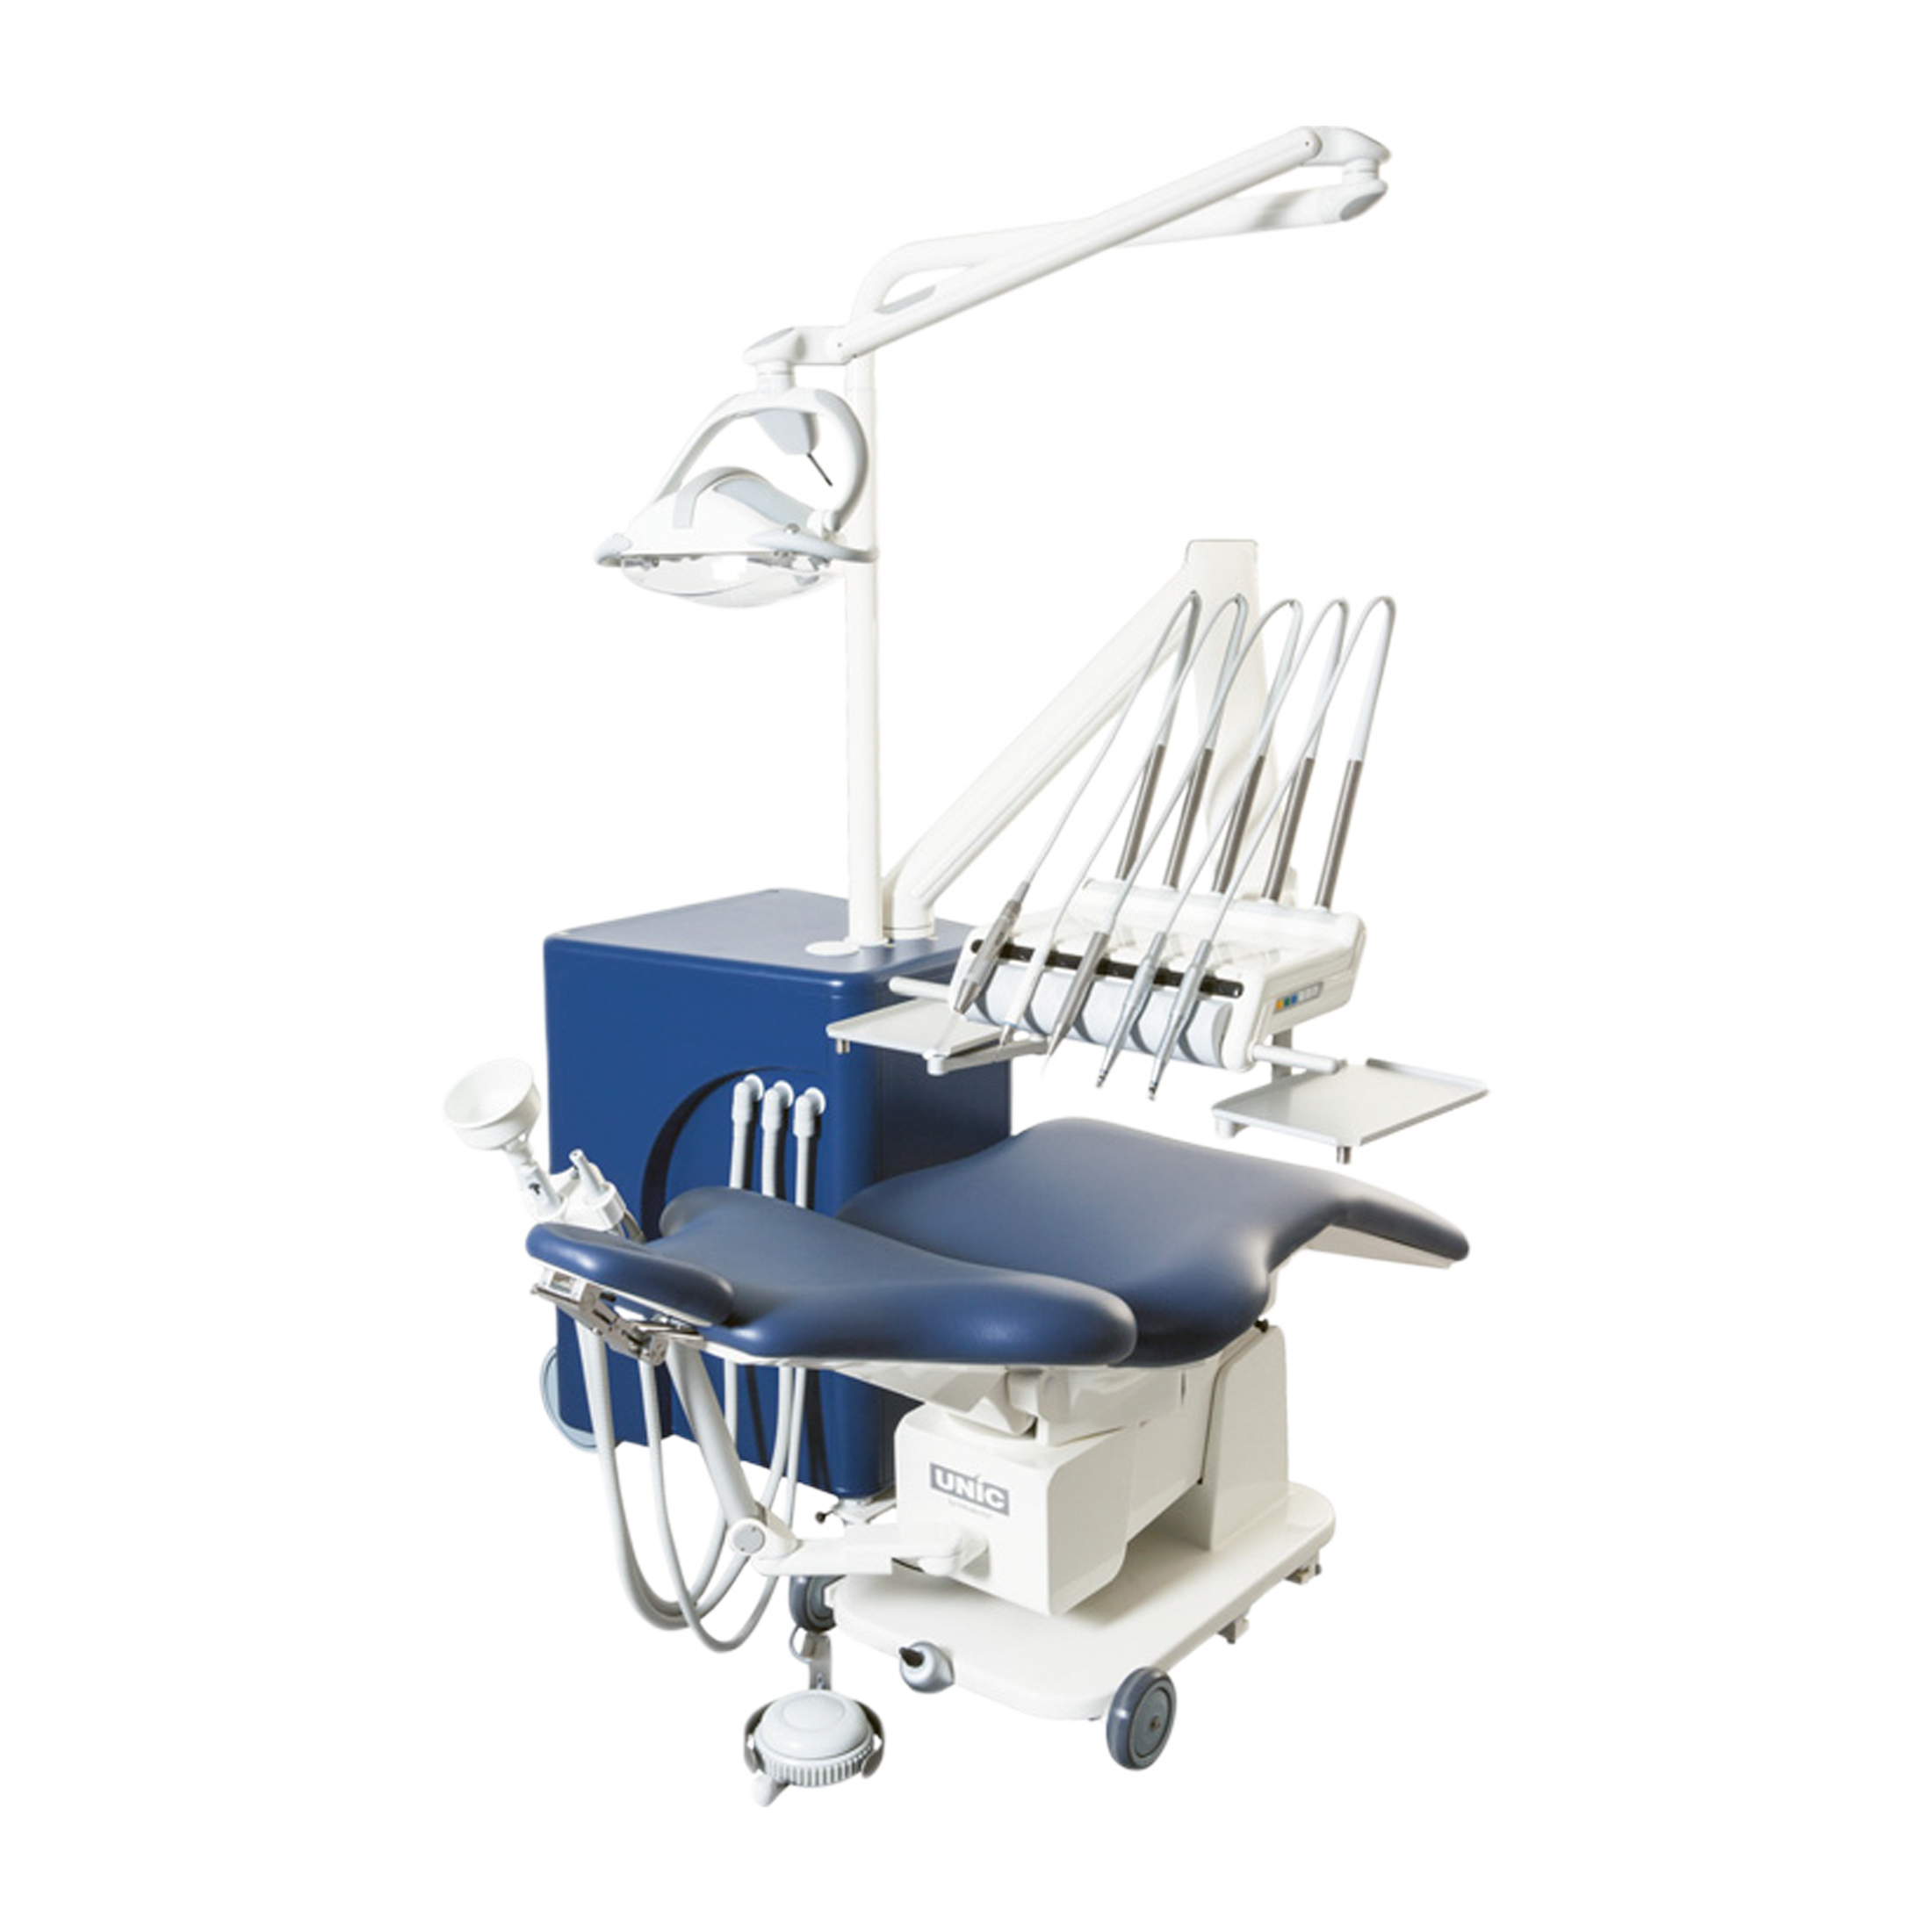 heka dental chairs